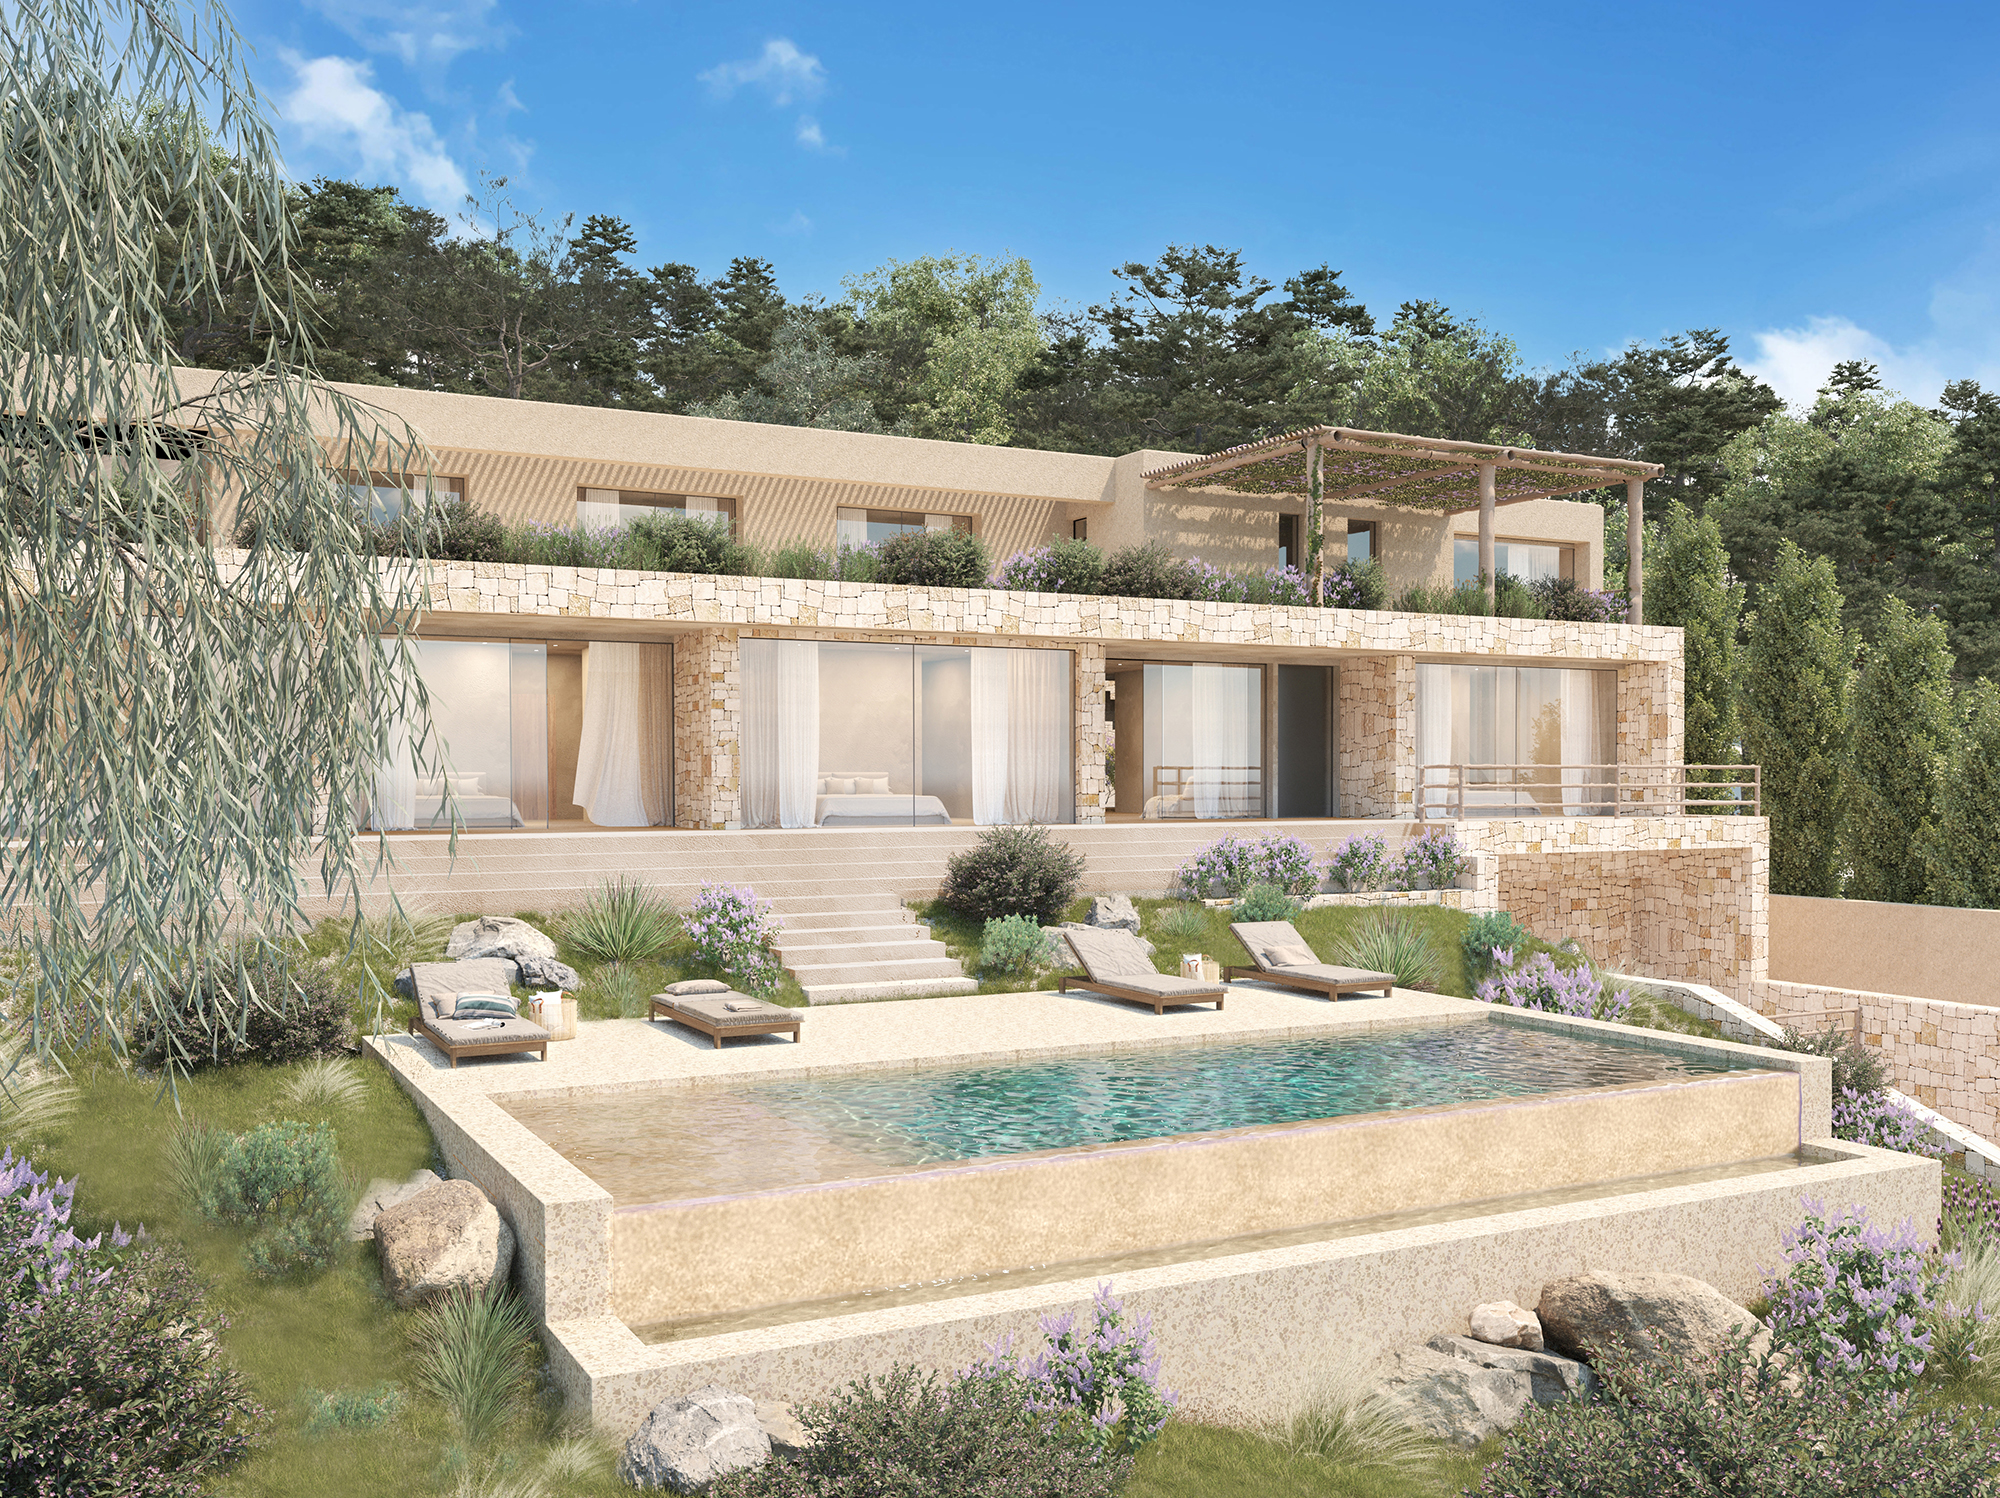 Projekt einer Villa in San Miguel mit Meerblick